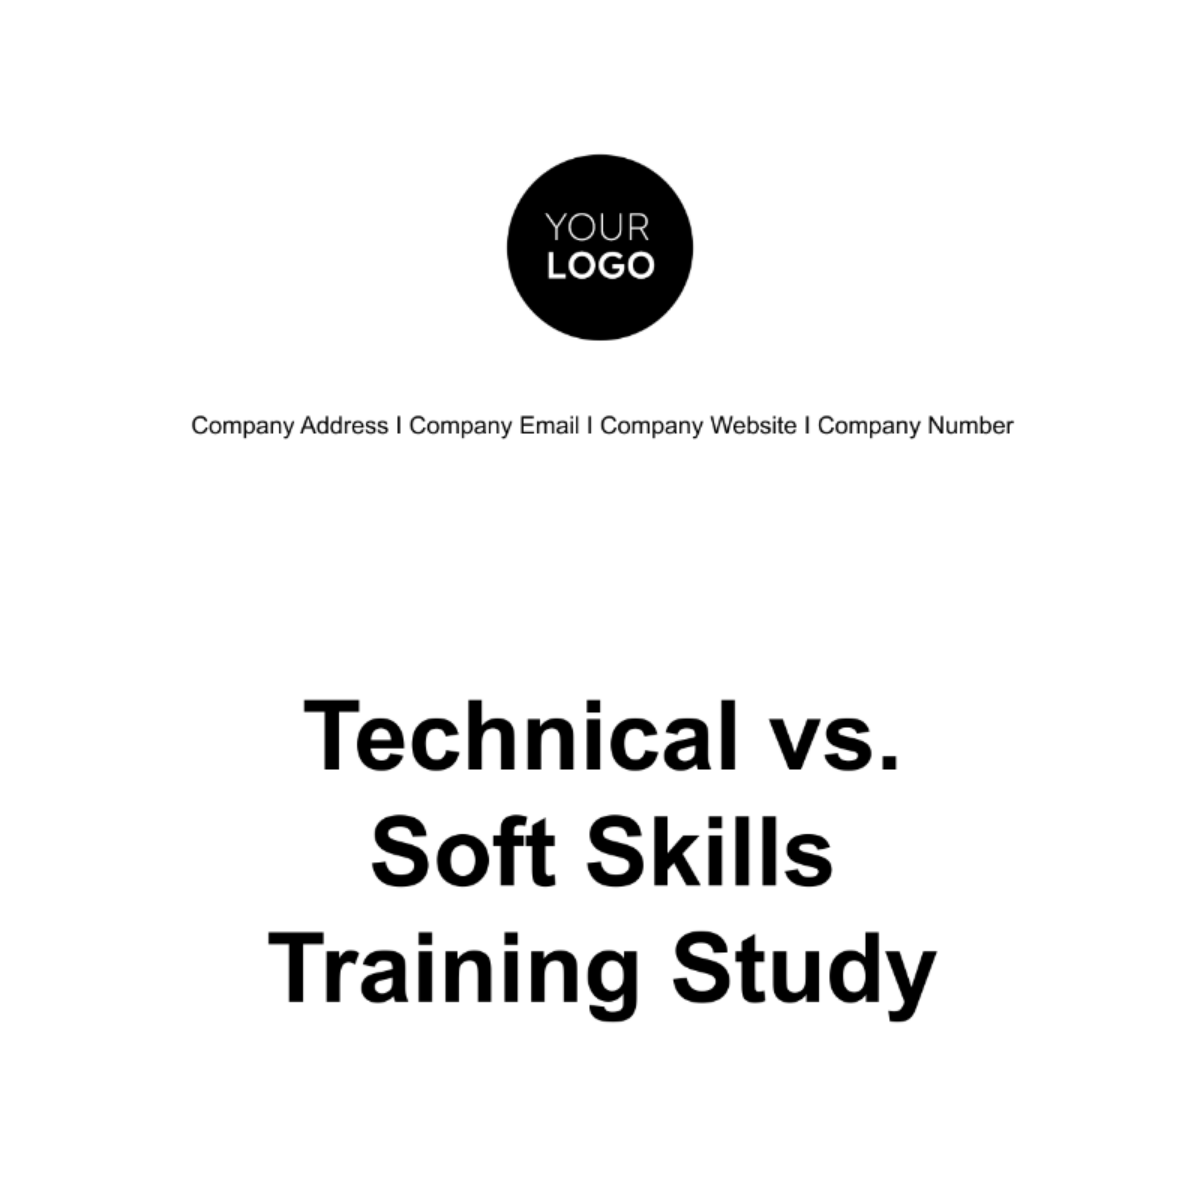 Technical vs. Soft Skills Training Study HR Template